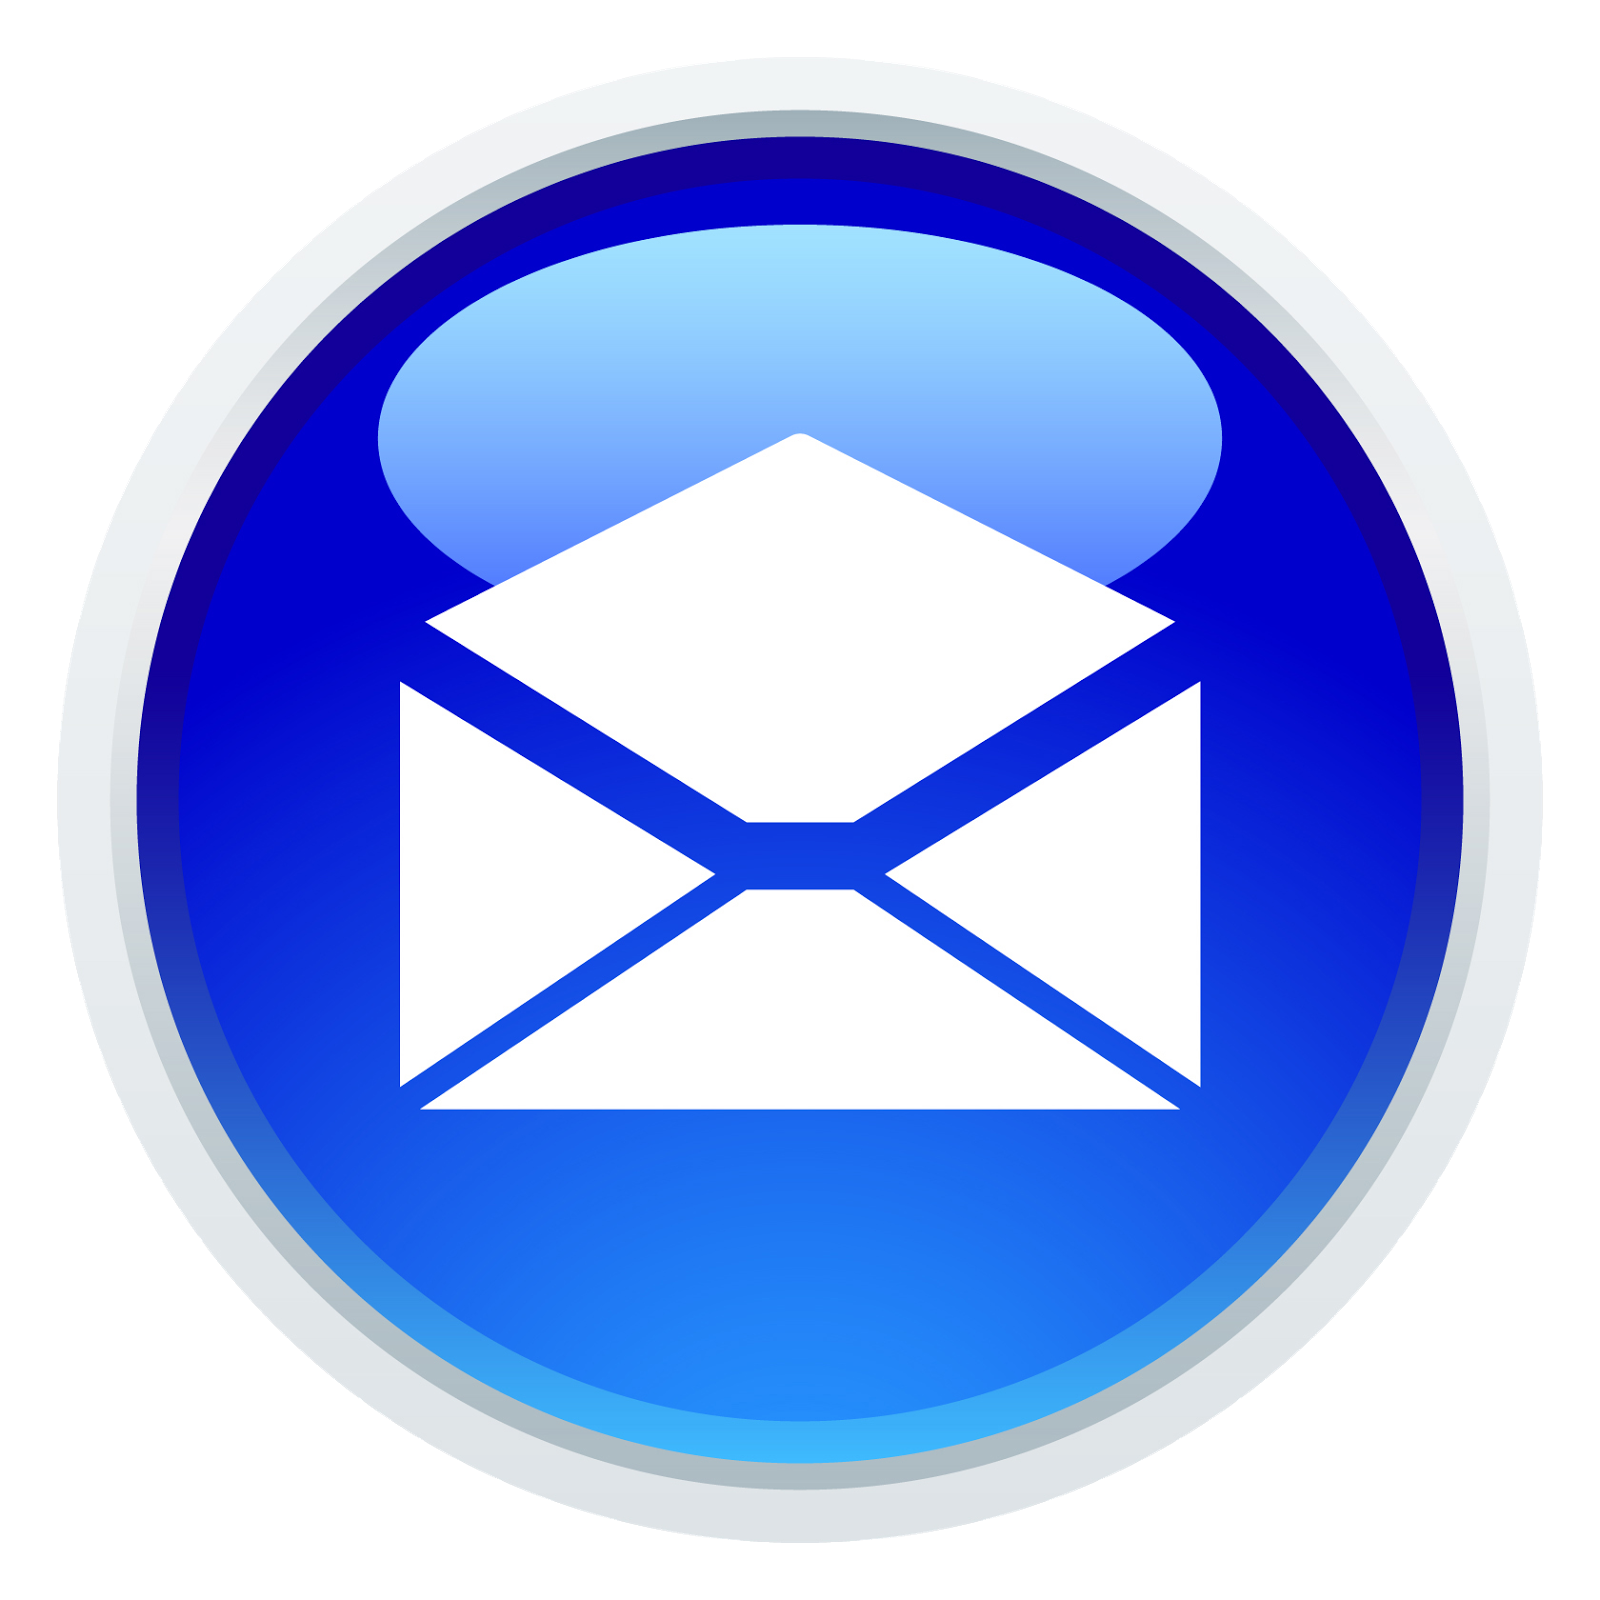 Picture mail. Знак почты. Значок email. Пиктограмма электронная почта. Почта логотип.